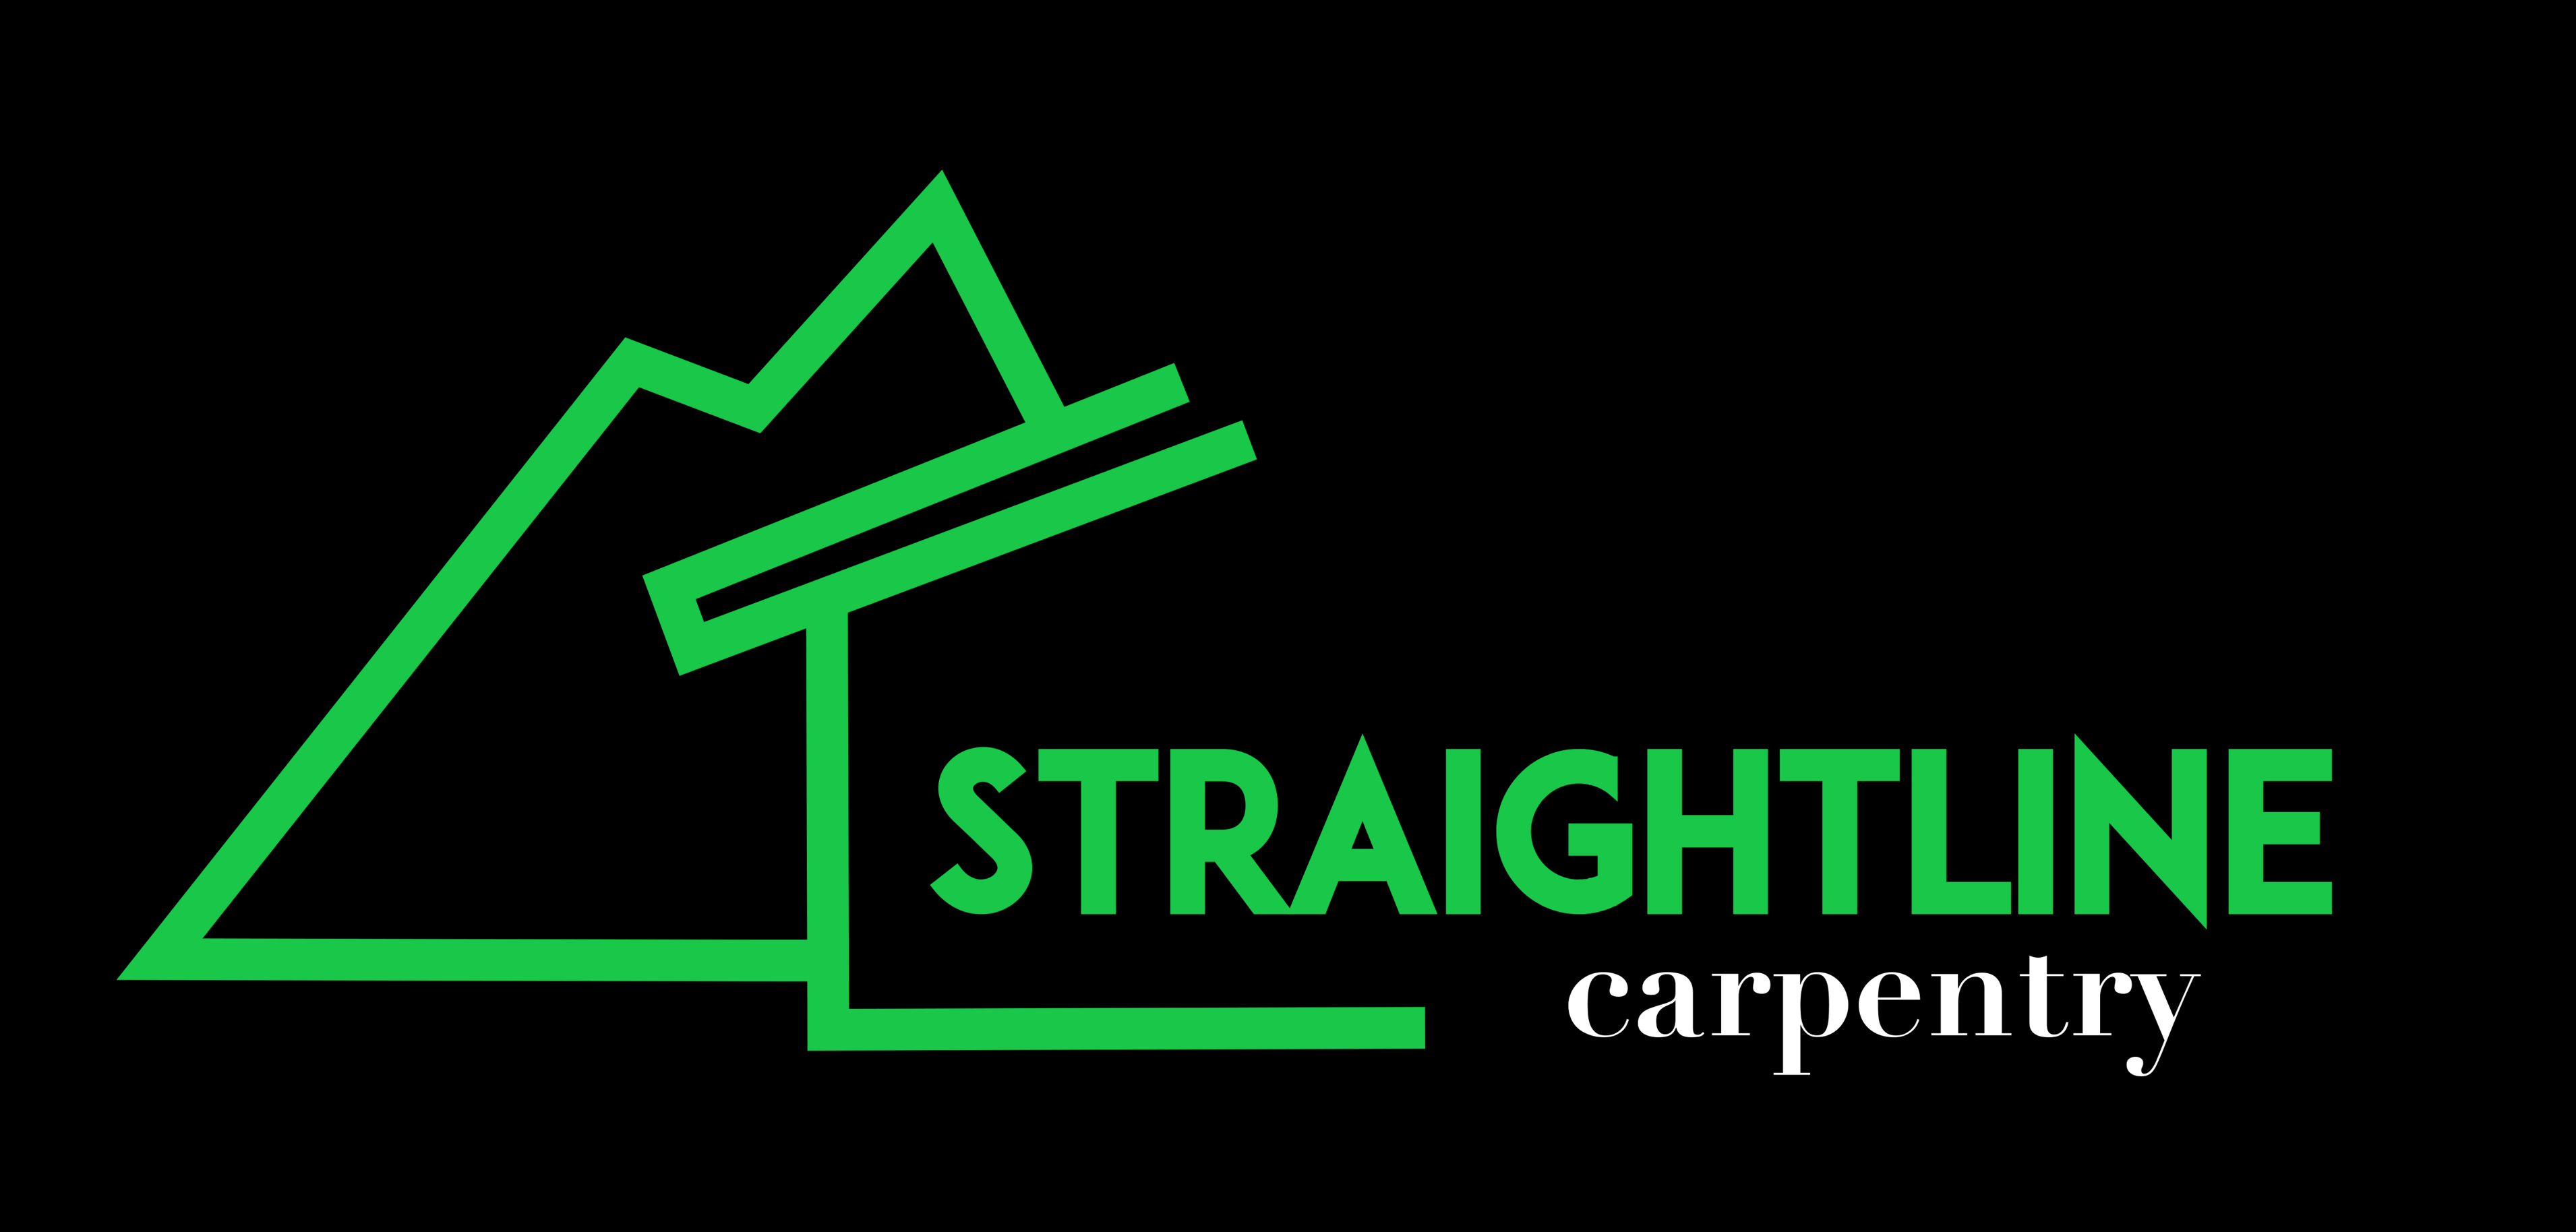 Straightline Carpentry logo